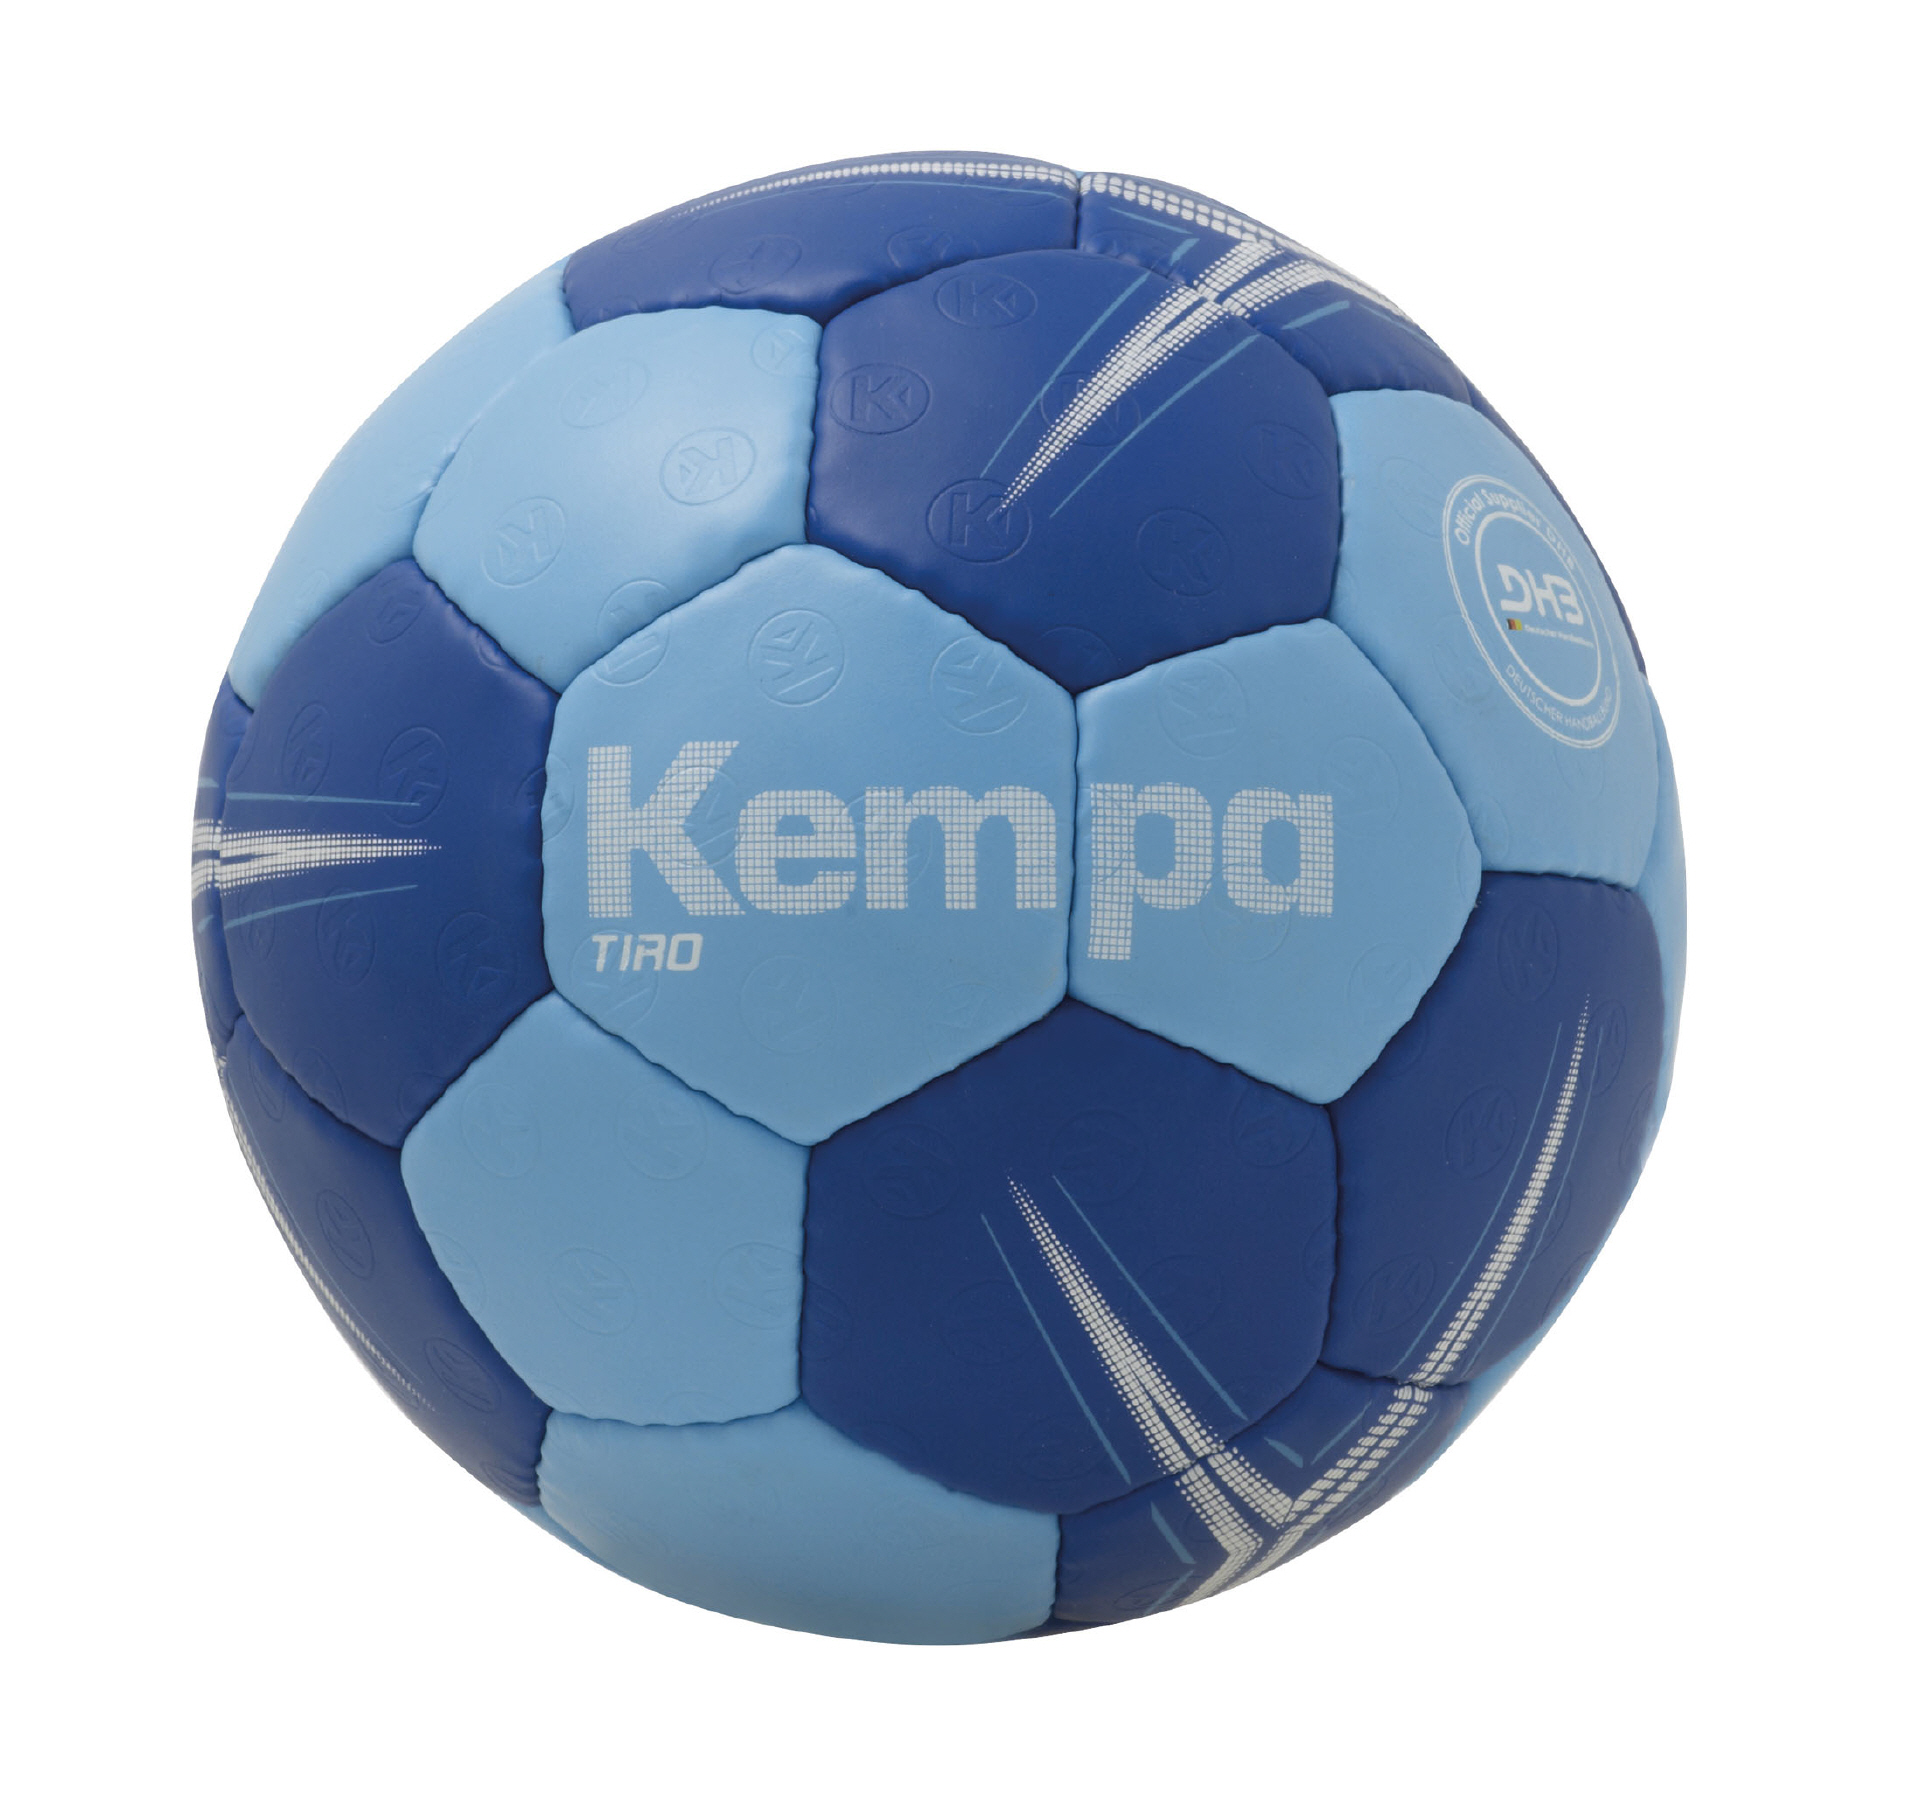 allgaeusport.de - Kempa Trio Handball Größe